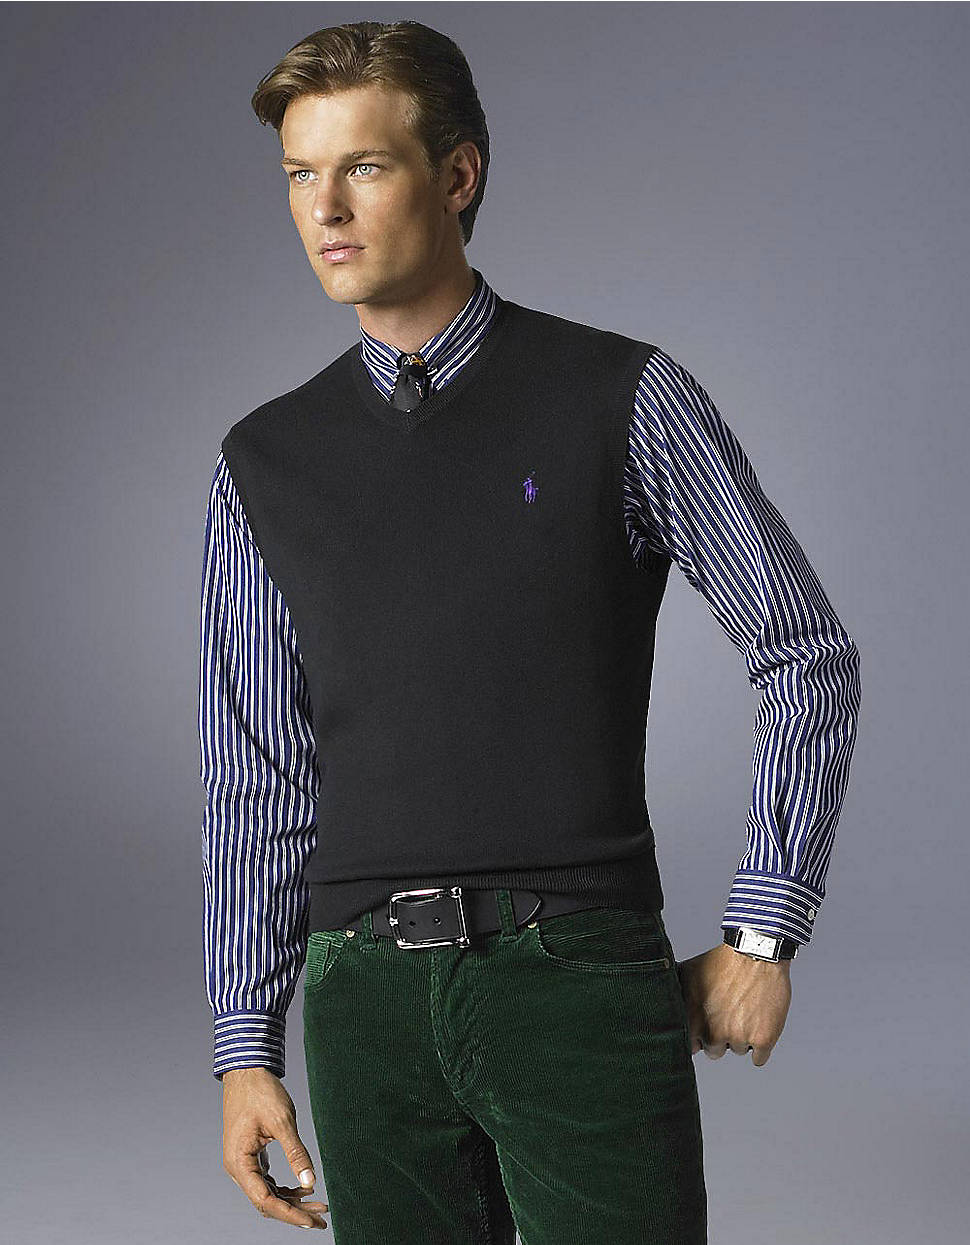 Lyst - Polo Ralph Lauren Pima Cotton Vneck Sweater Vest in Blue for Men